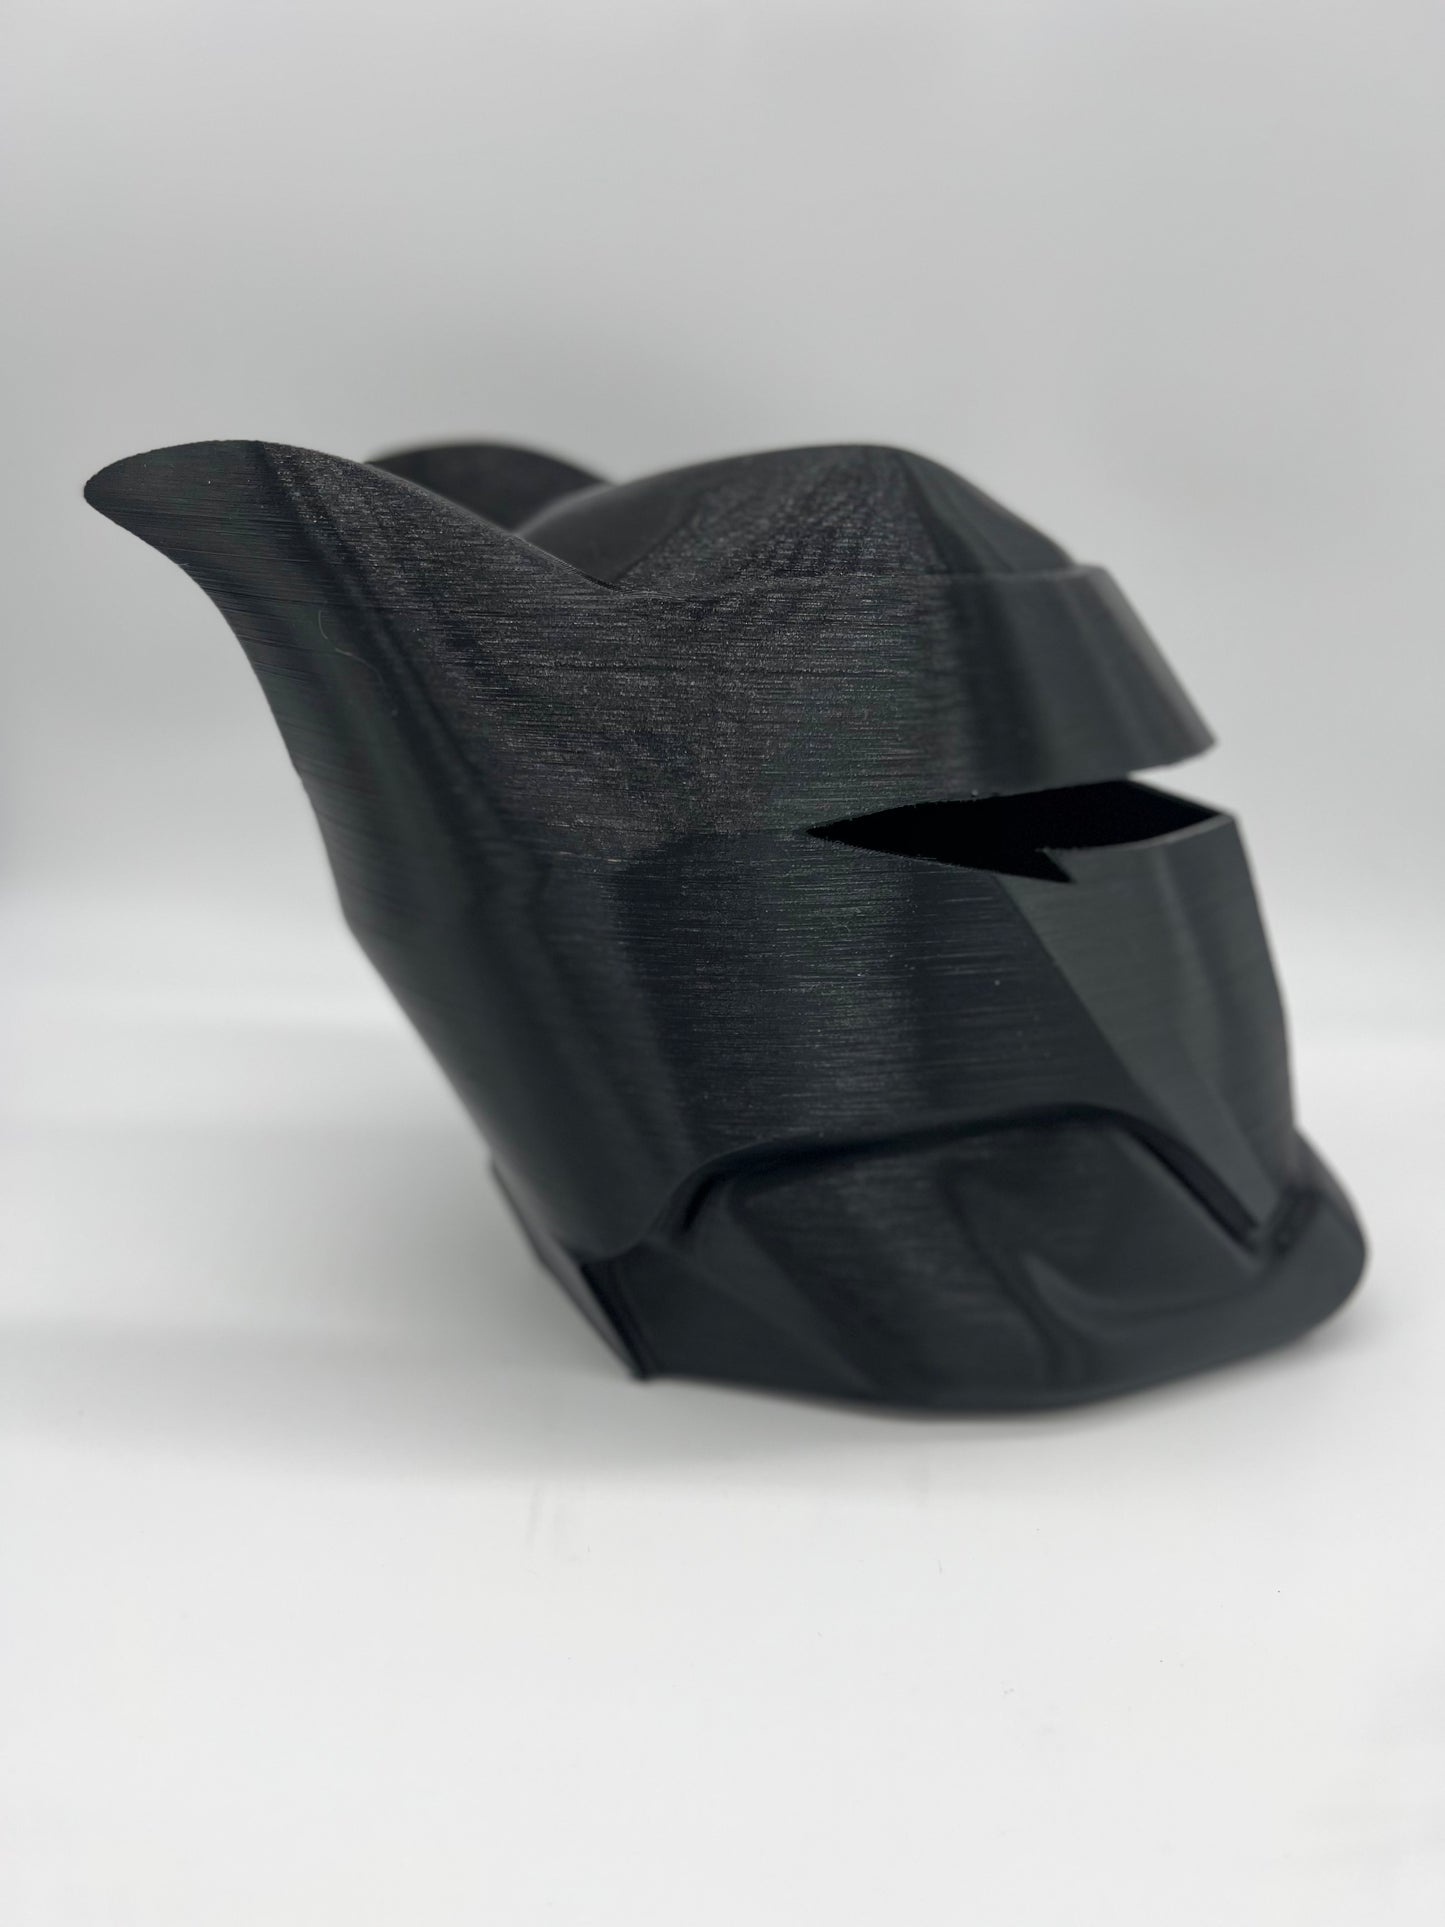 Hellbat Batman Wearable/Cosplay Helmet